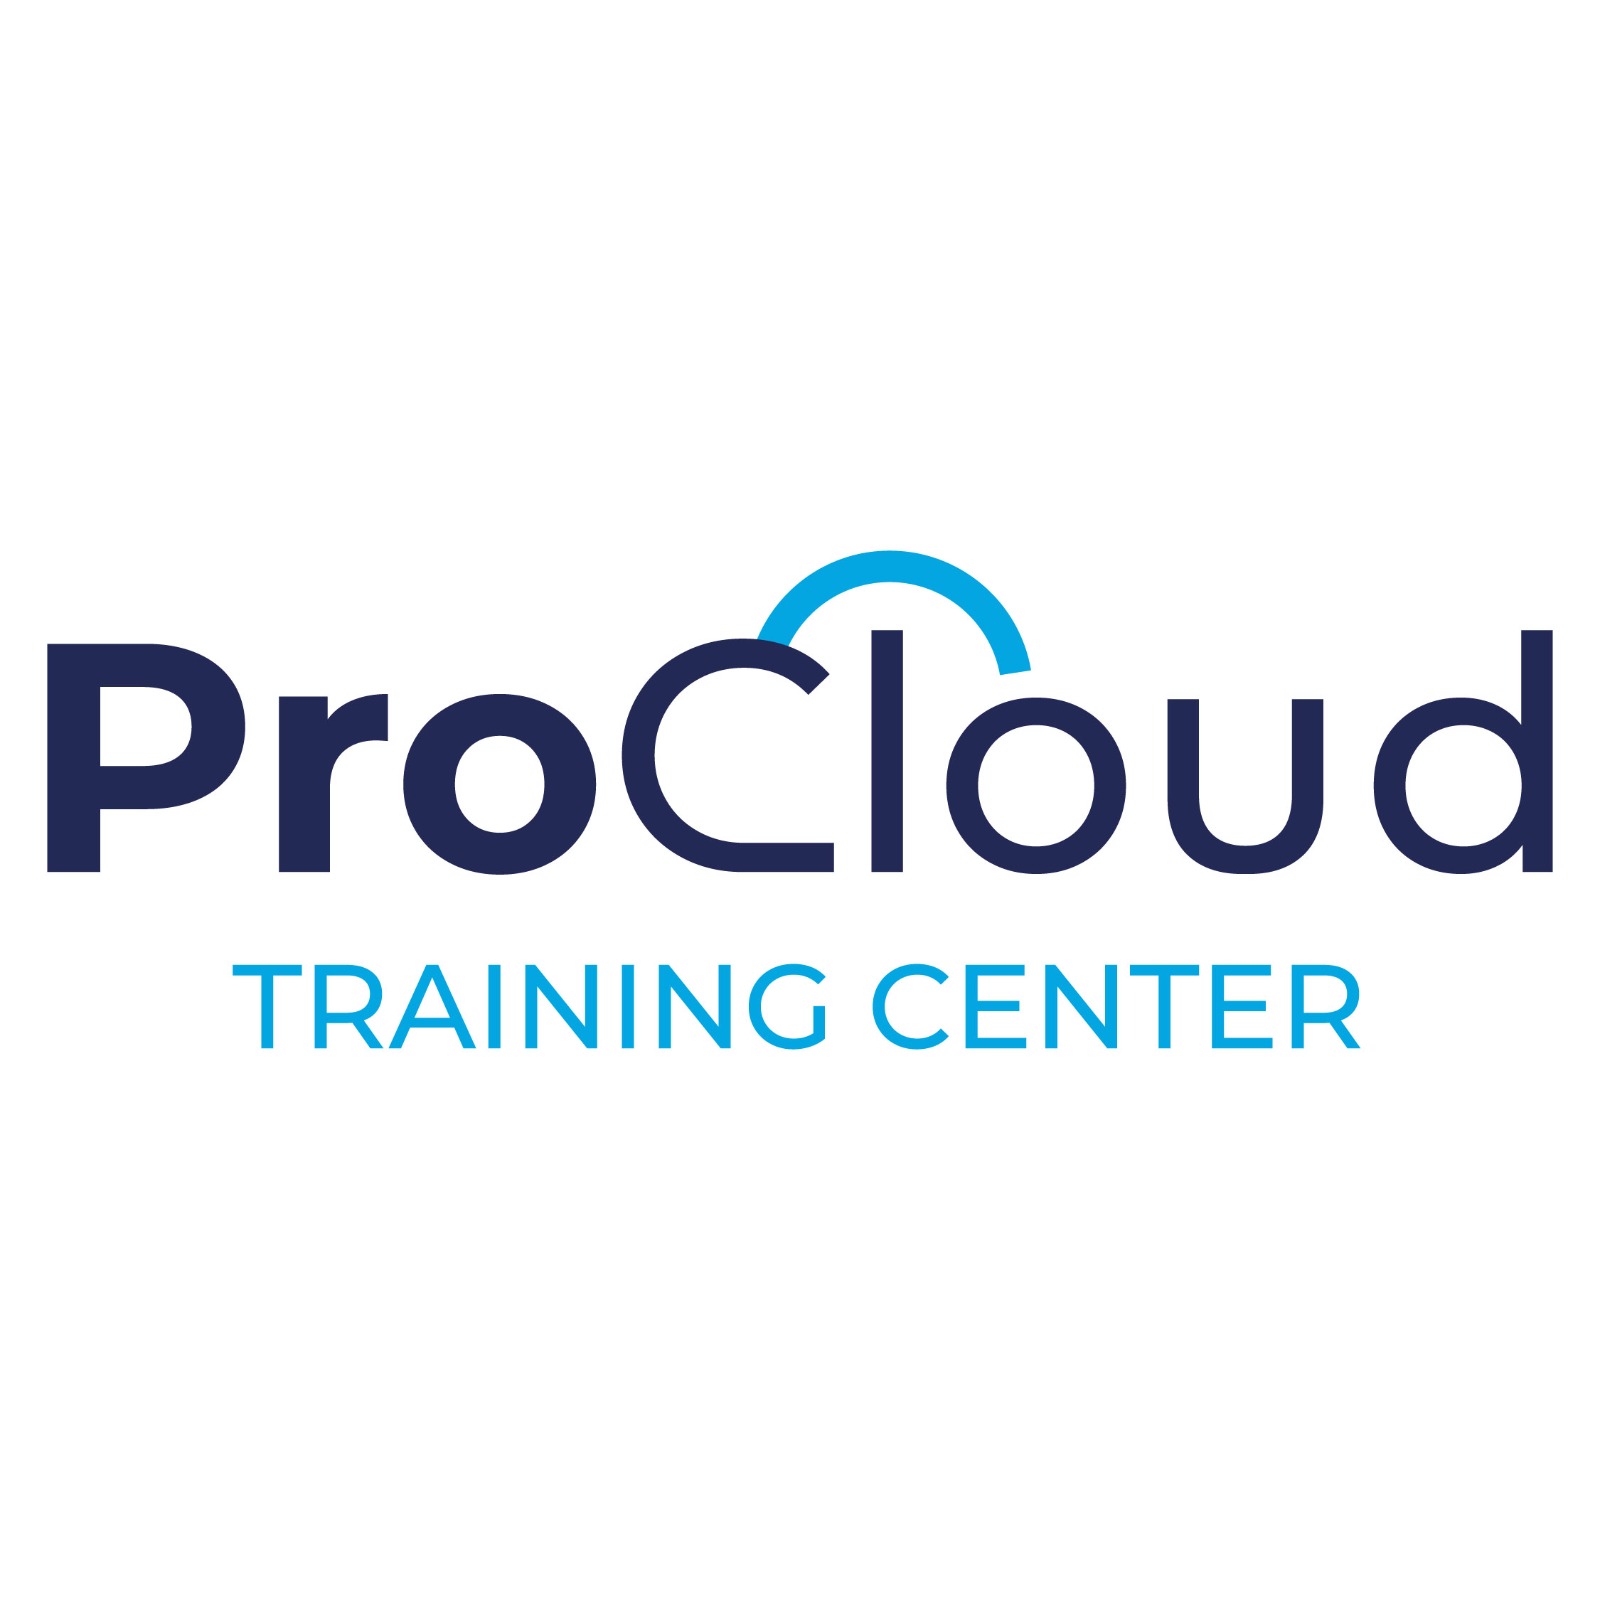 ProCloud Training Center